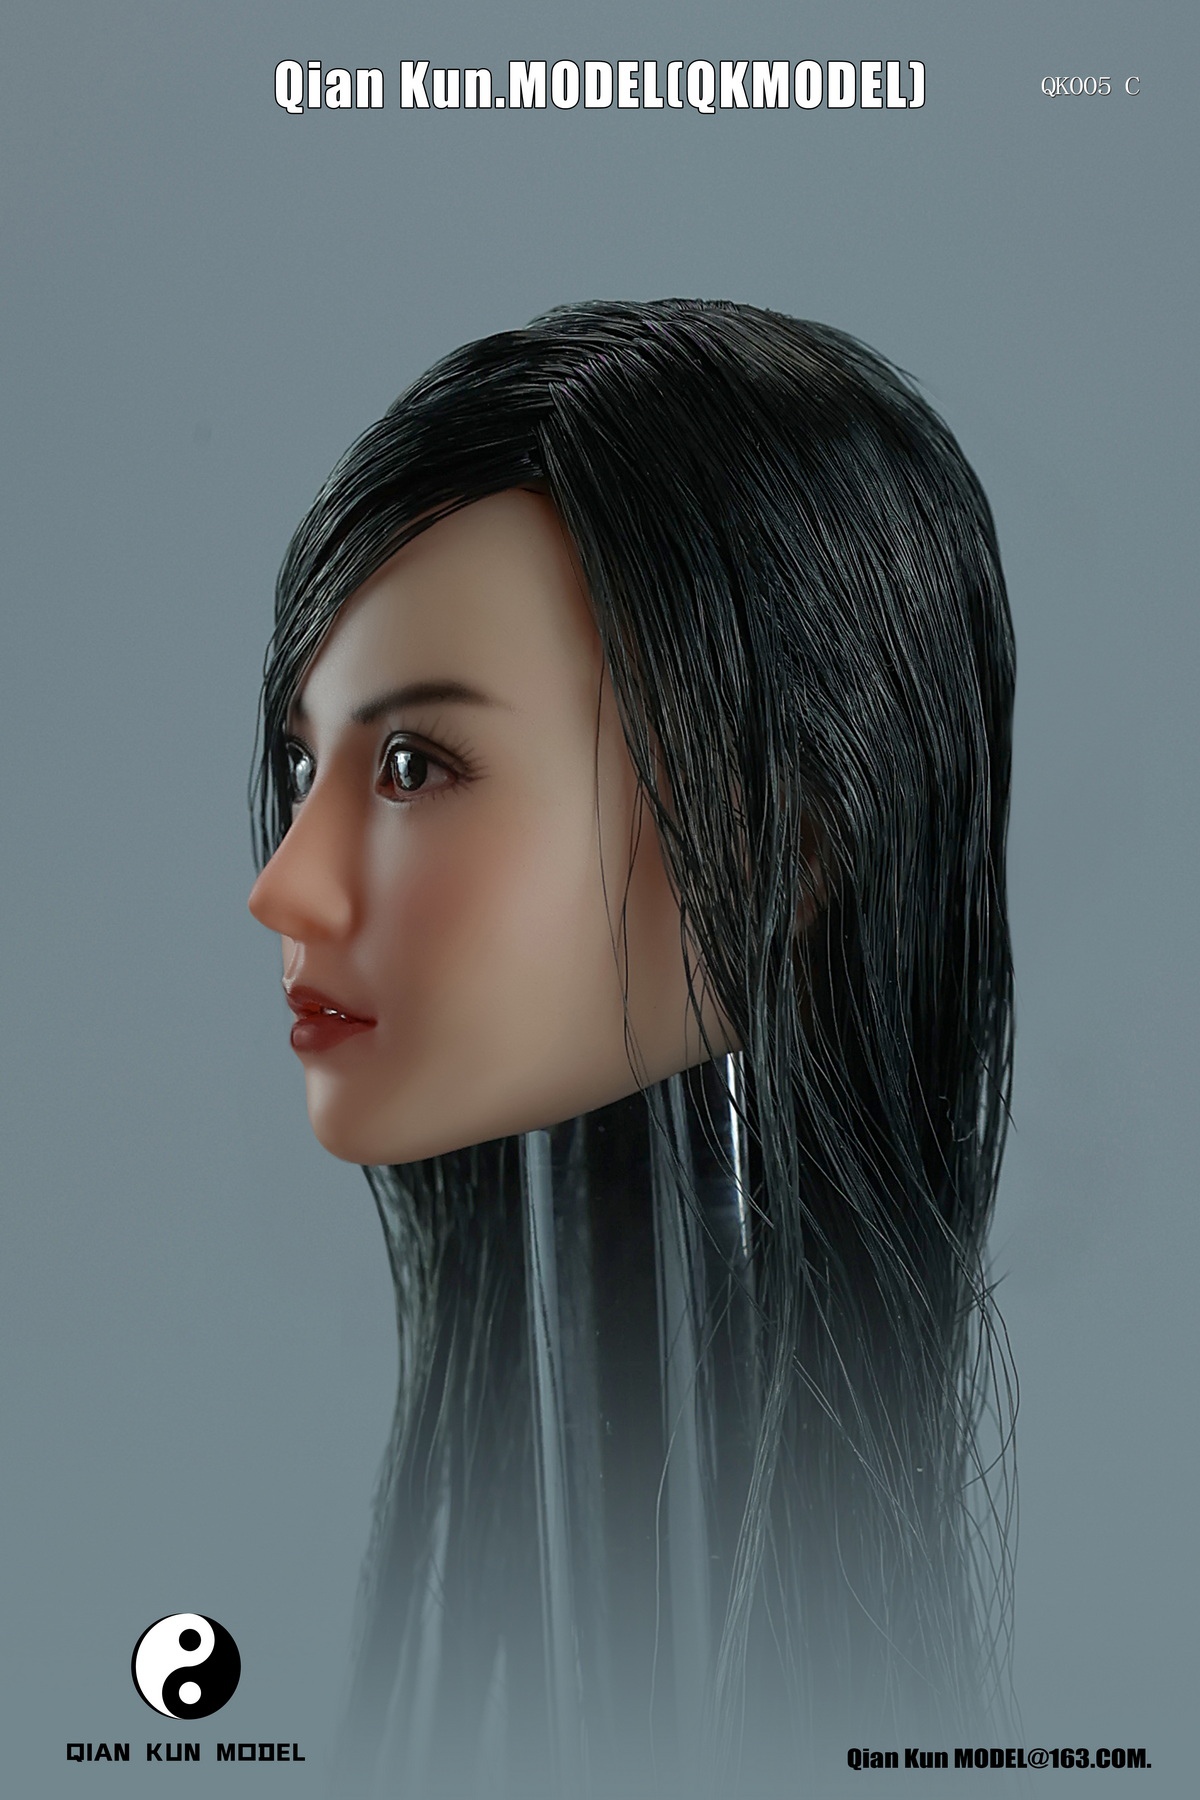 girl - NEW PRODUCT: Qian Kun.Model - Sweet Asian Female Head Sculpture (QK005-A/B/C) 14156